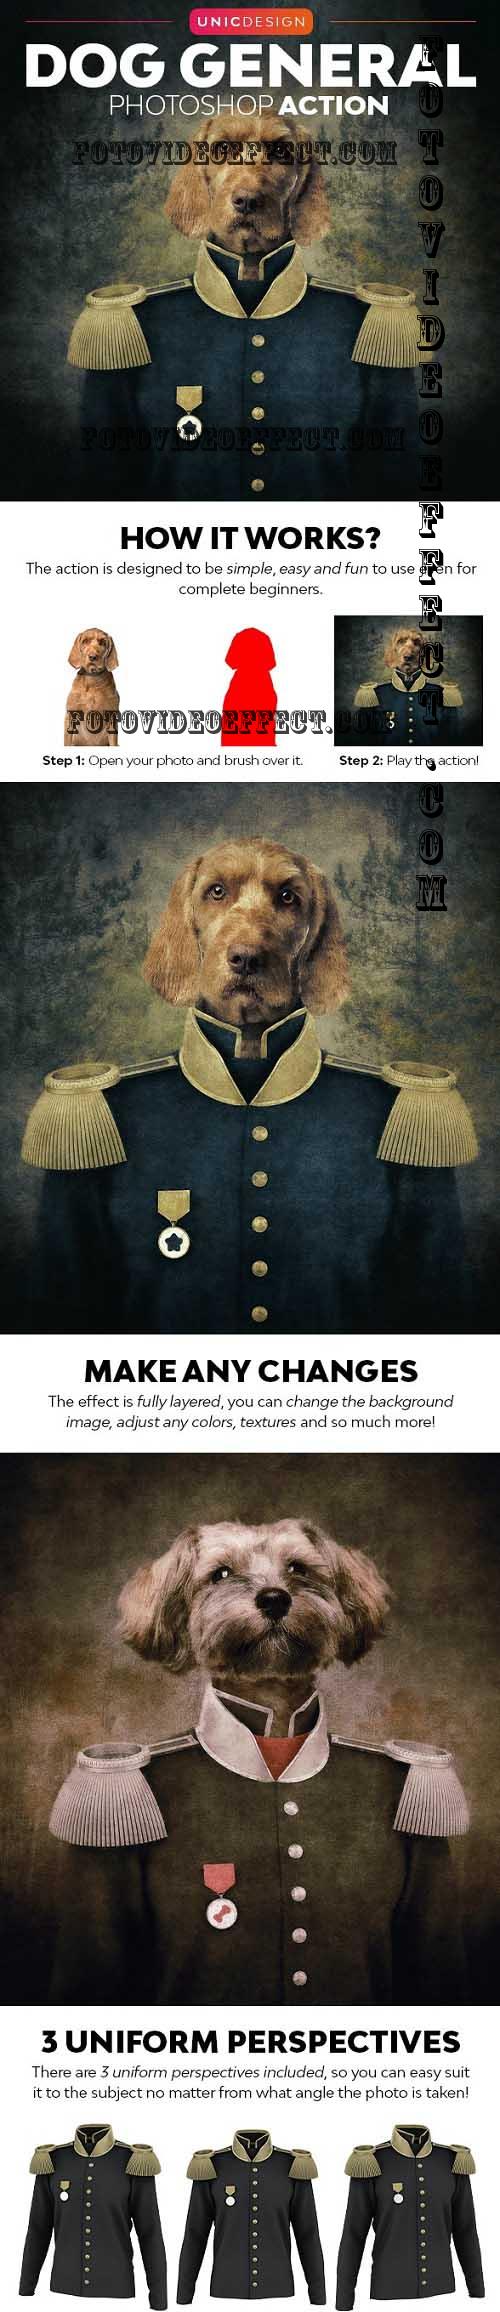 Dog General Photoshop Action - 37233493